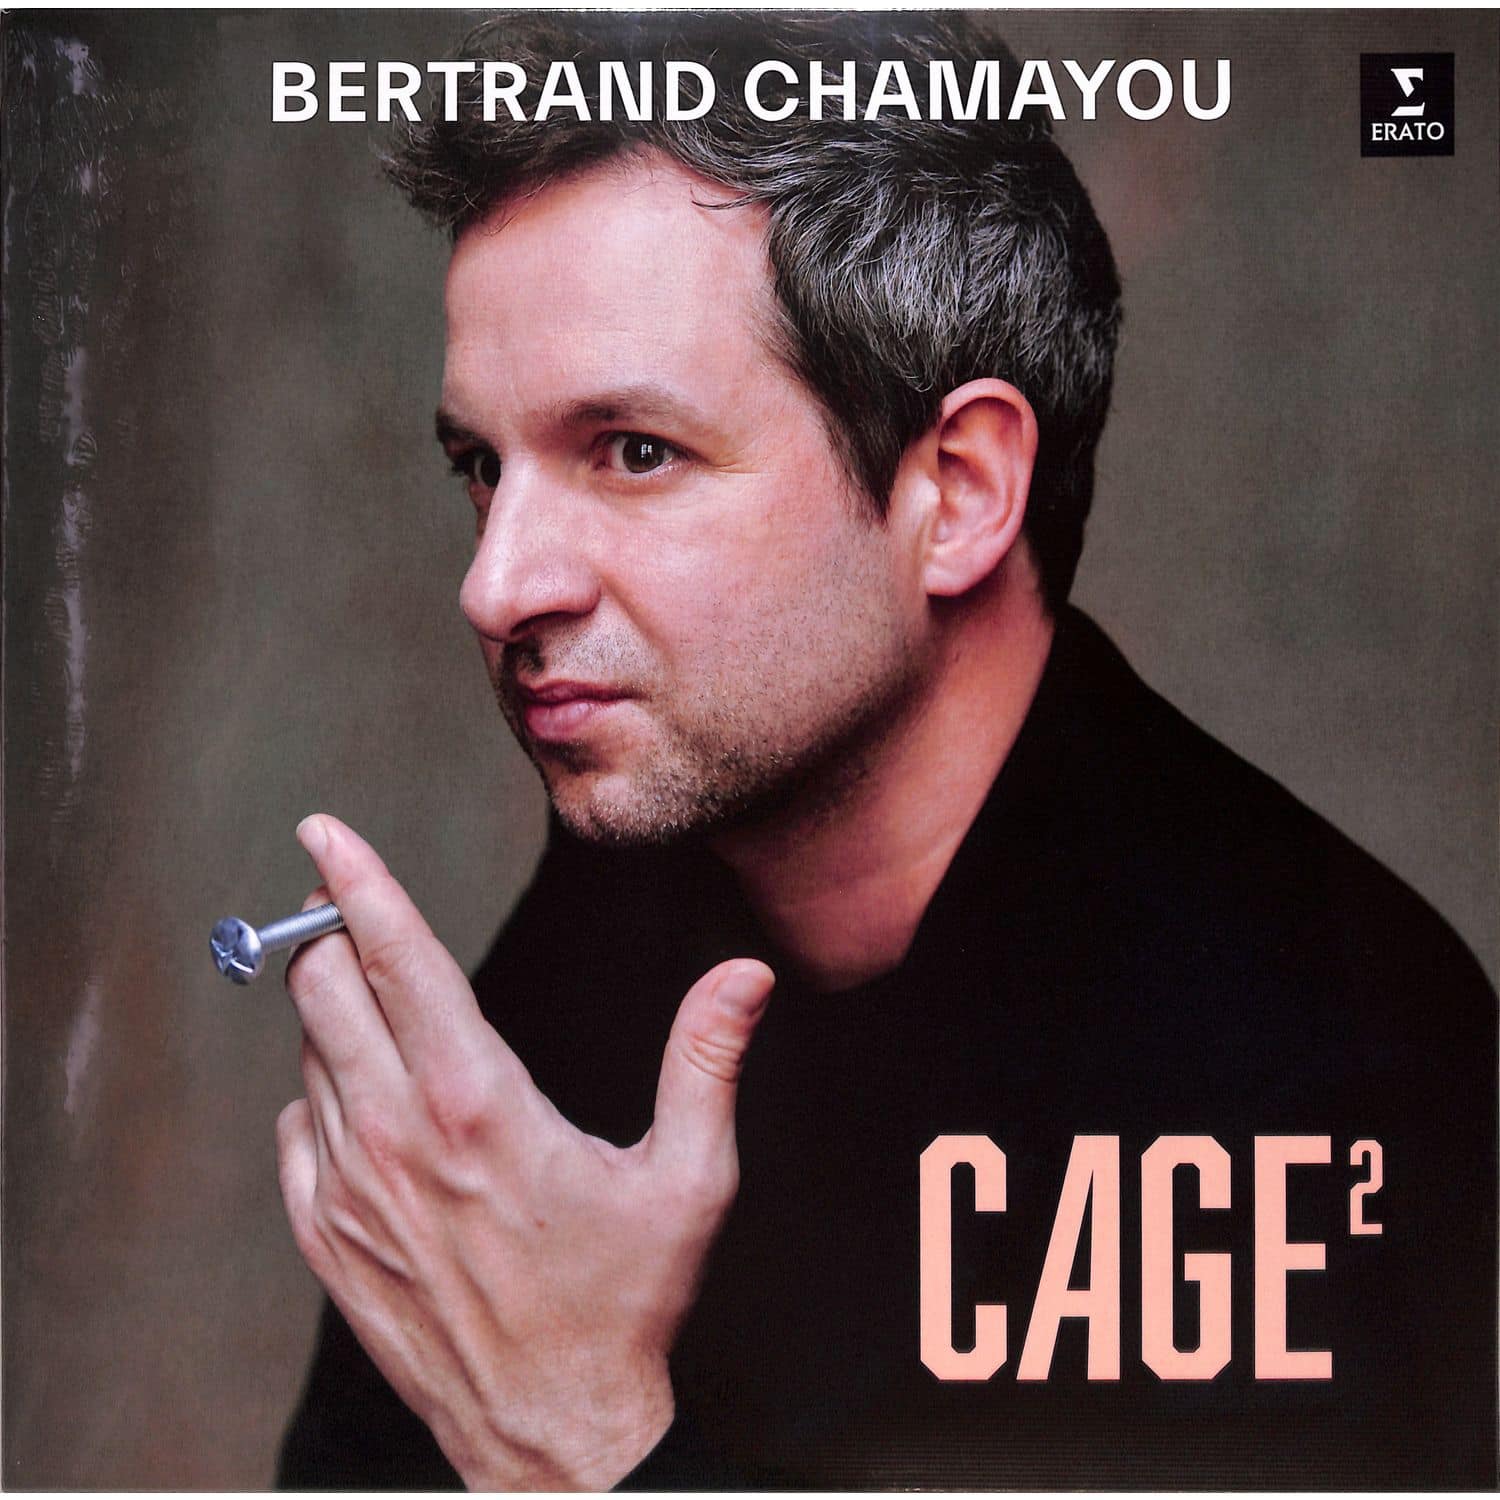 Bertrand Chamayou - CAGE2 